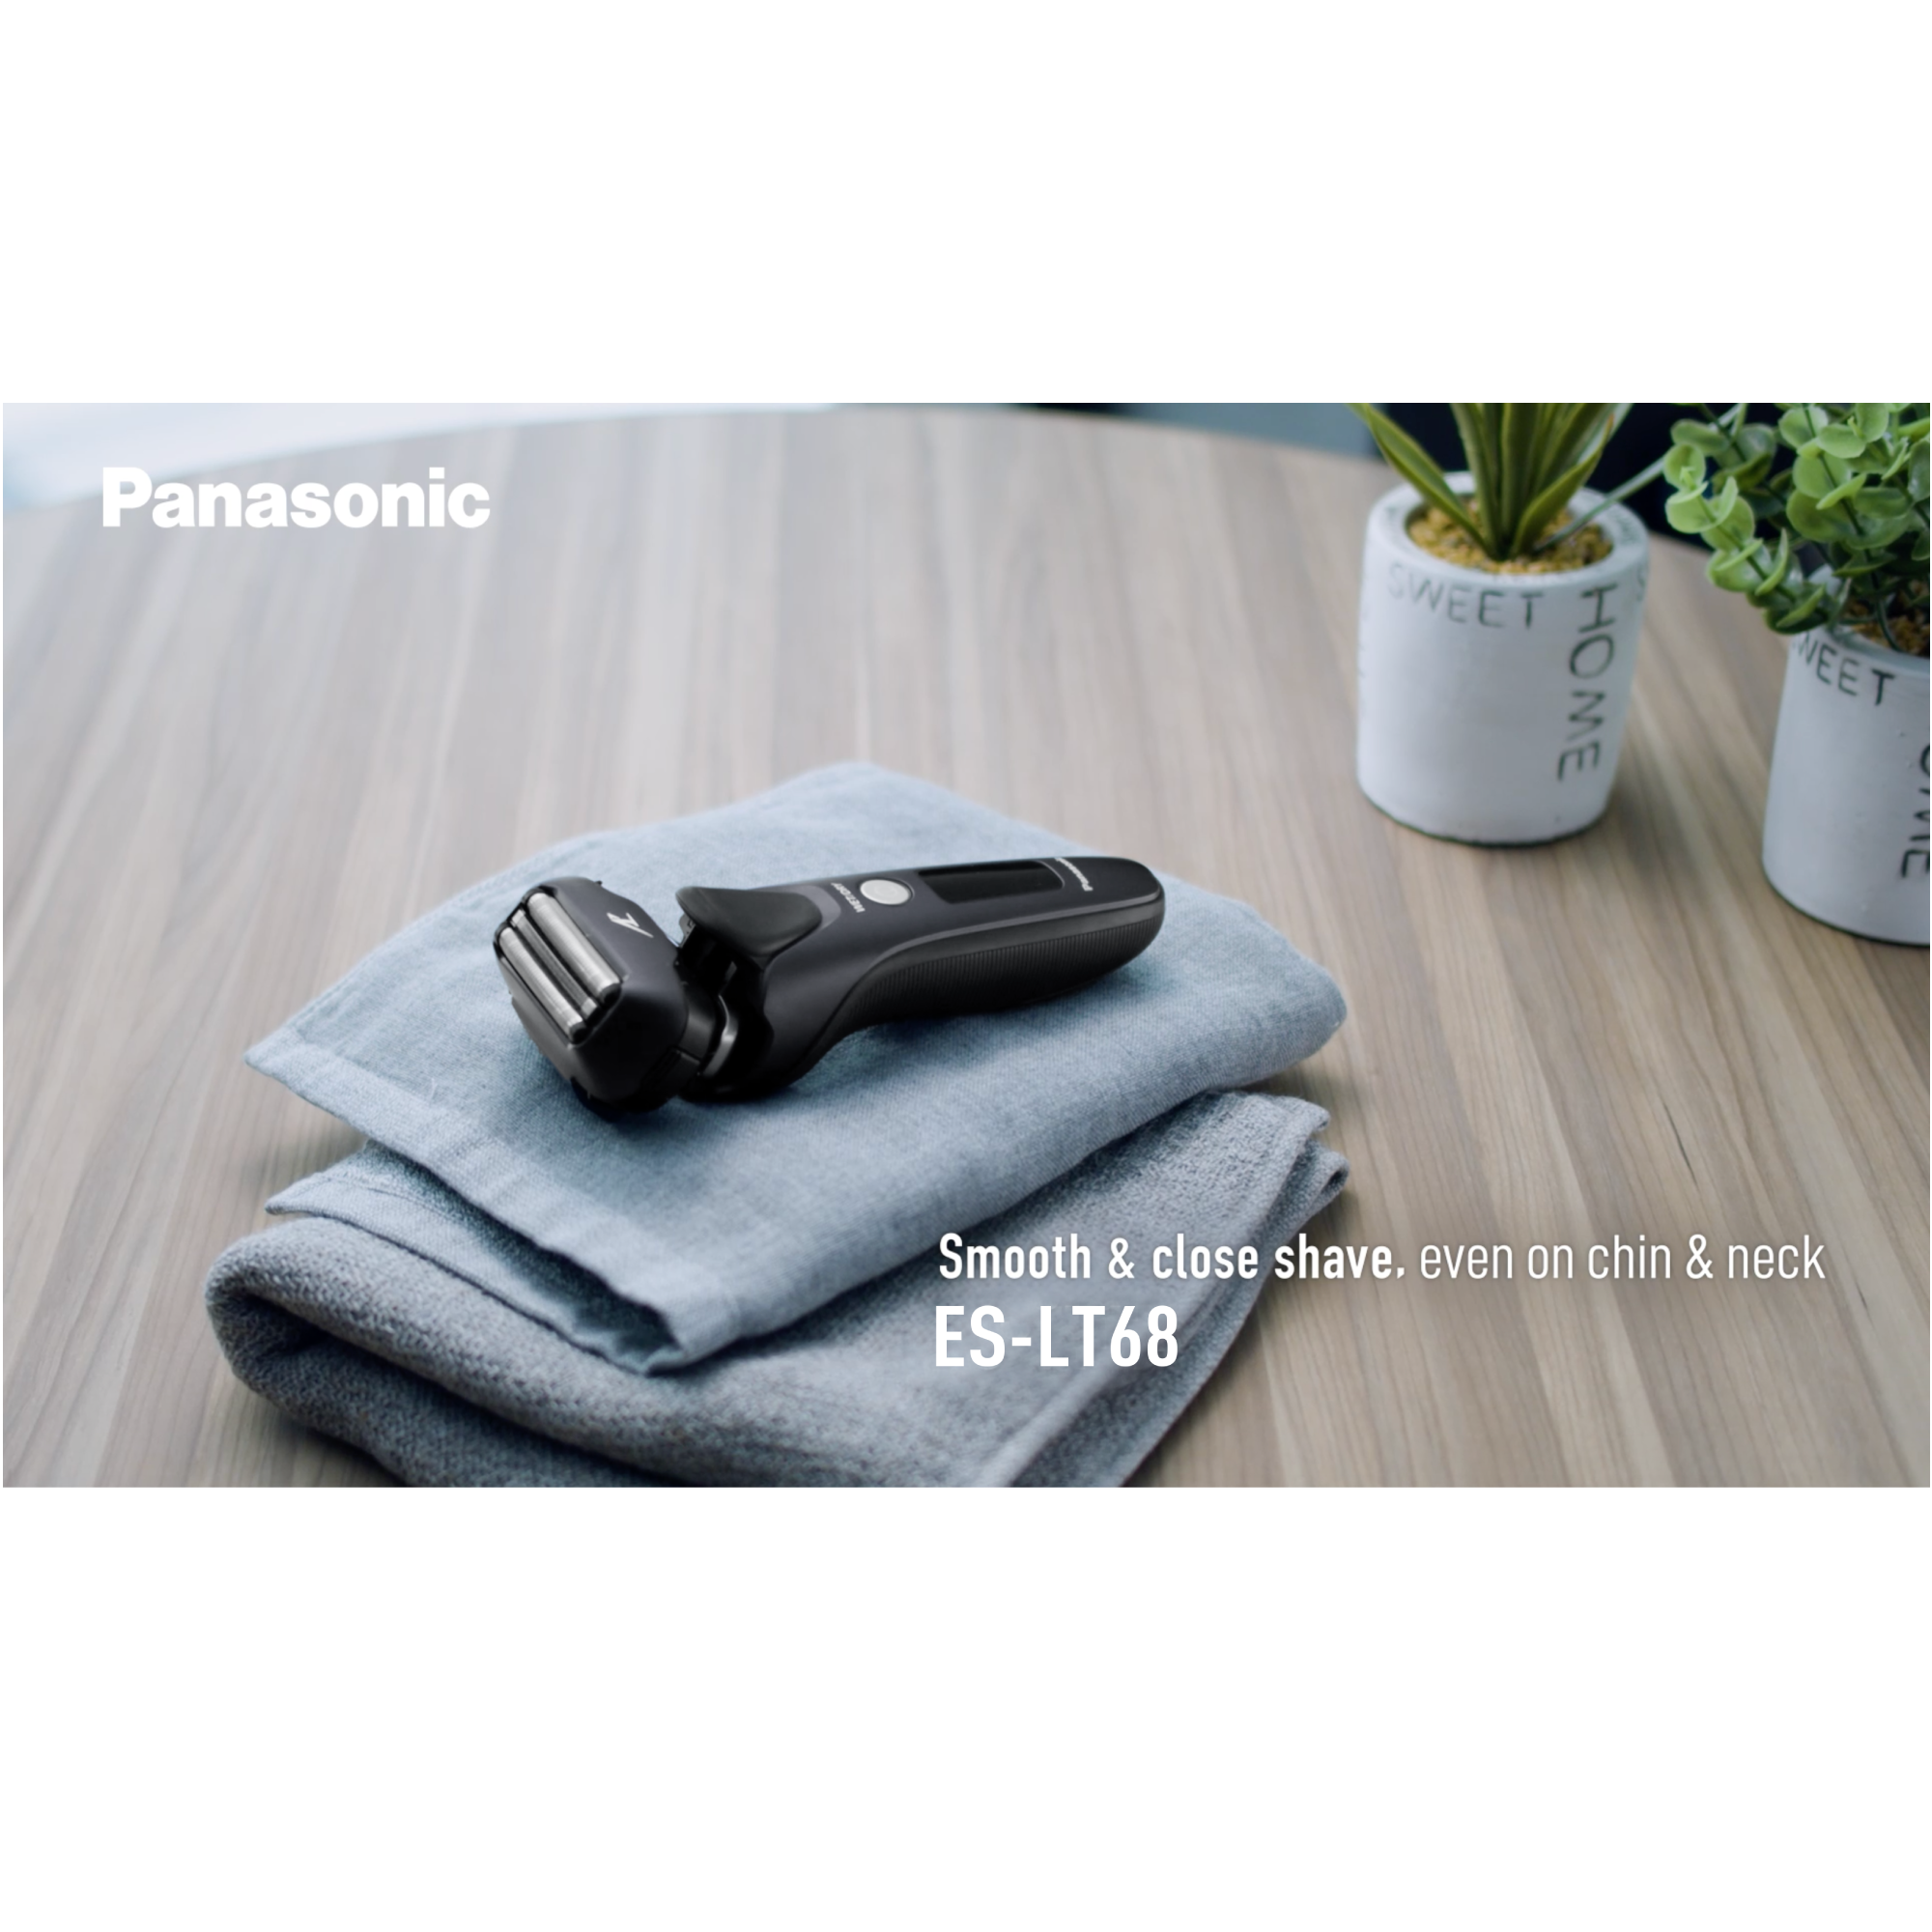 ES-LT68 Panasonic Rasierer | Schweiz Nass-/Trocken